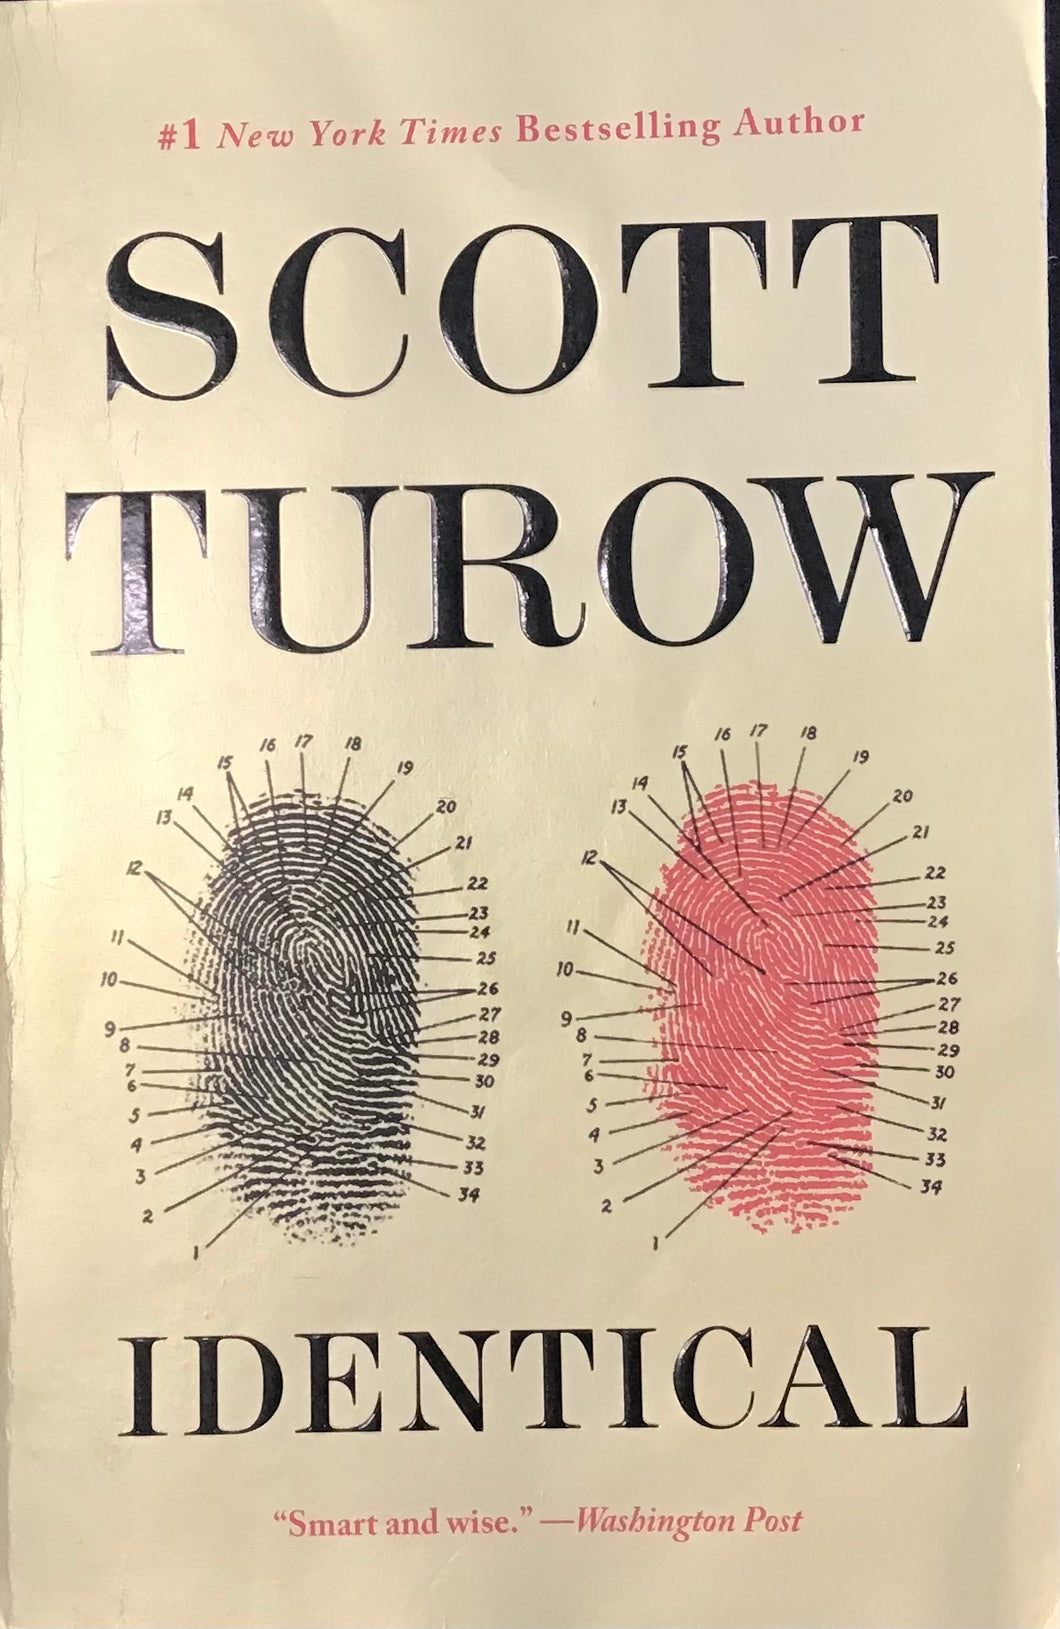 Identical, Scott Turow